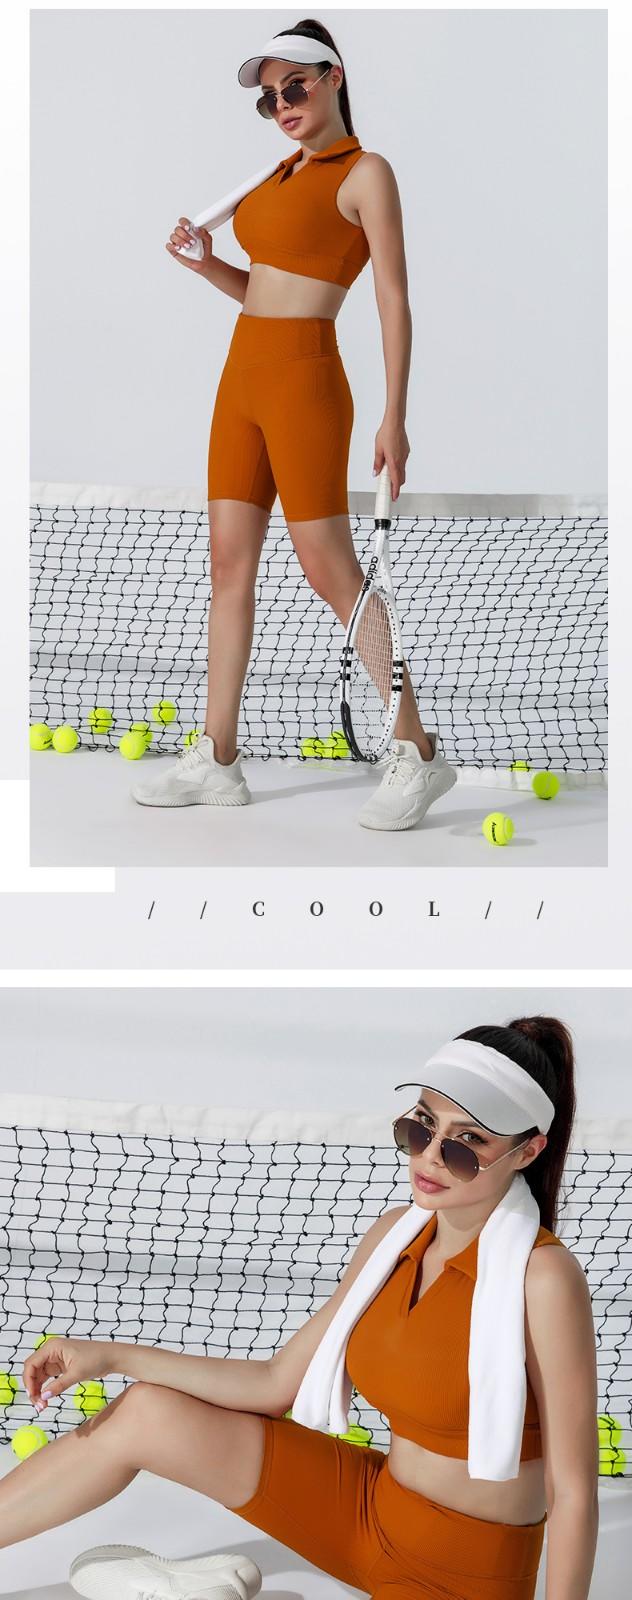 custom tennis wear ladies supplier for yoga